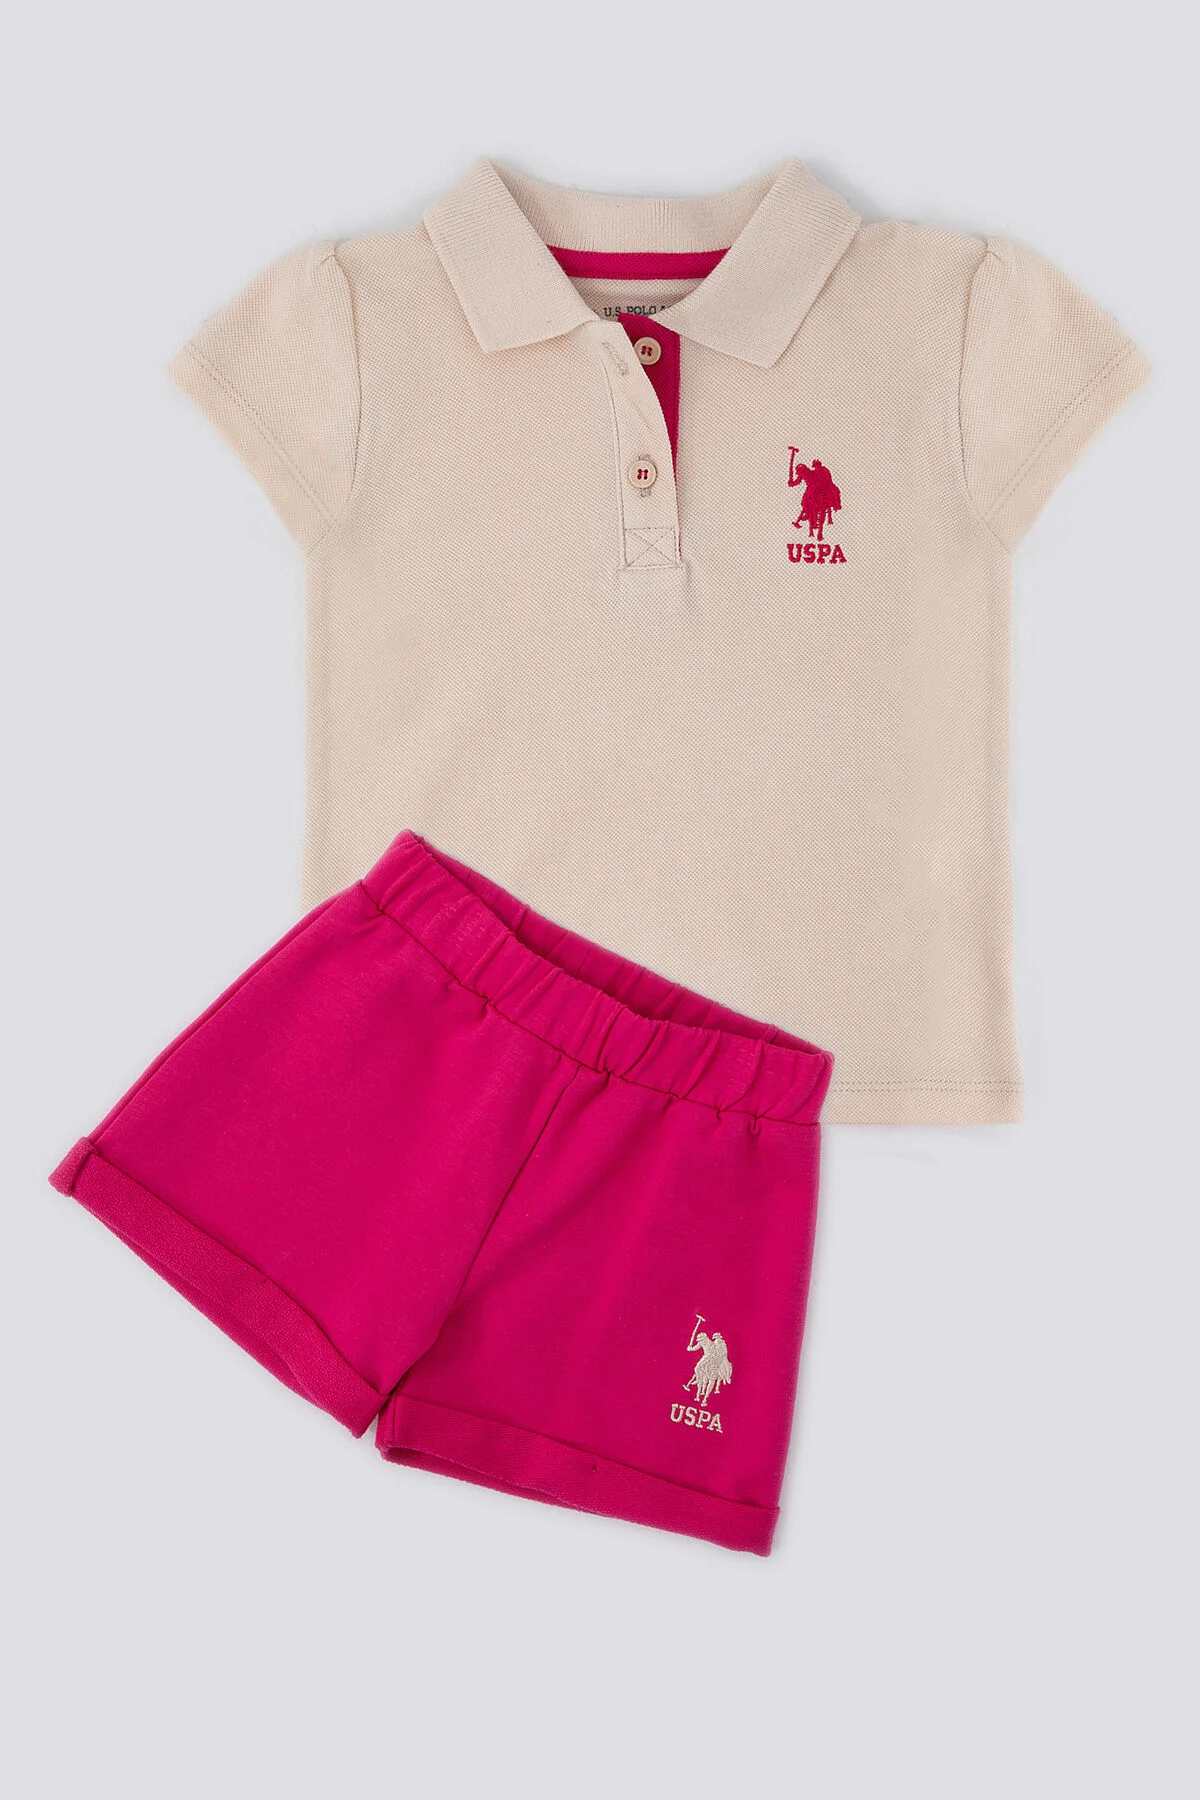 U.S. Polo Kız Bebek Kısa Kol T-Shirt 2'Li Takım 1247 Krem